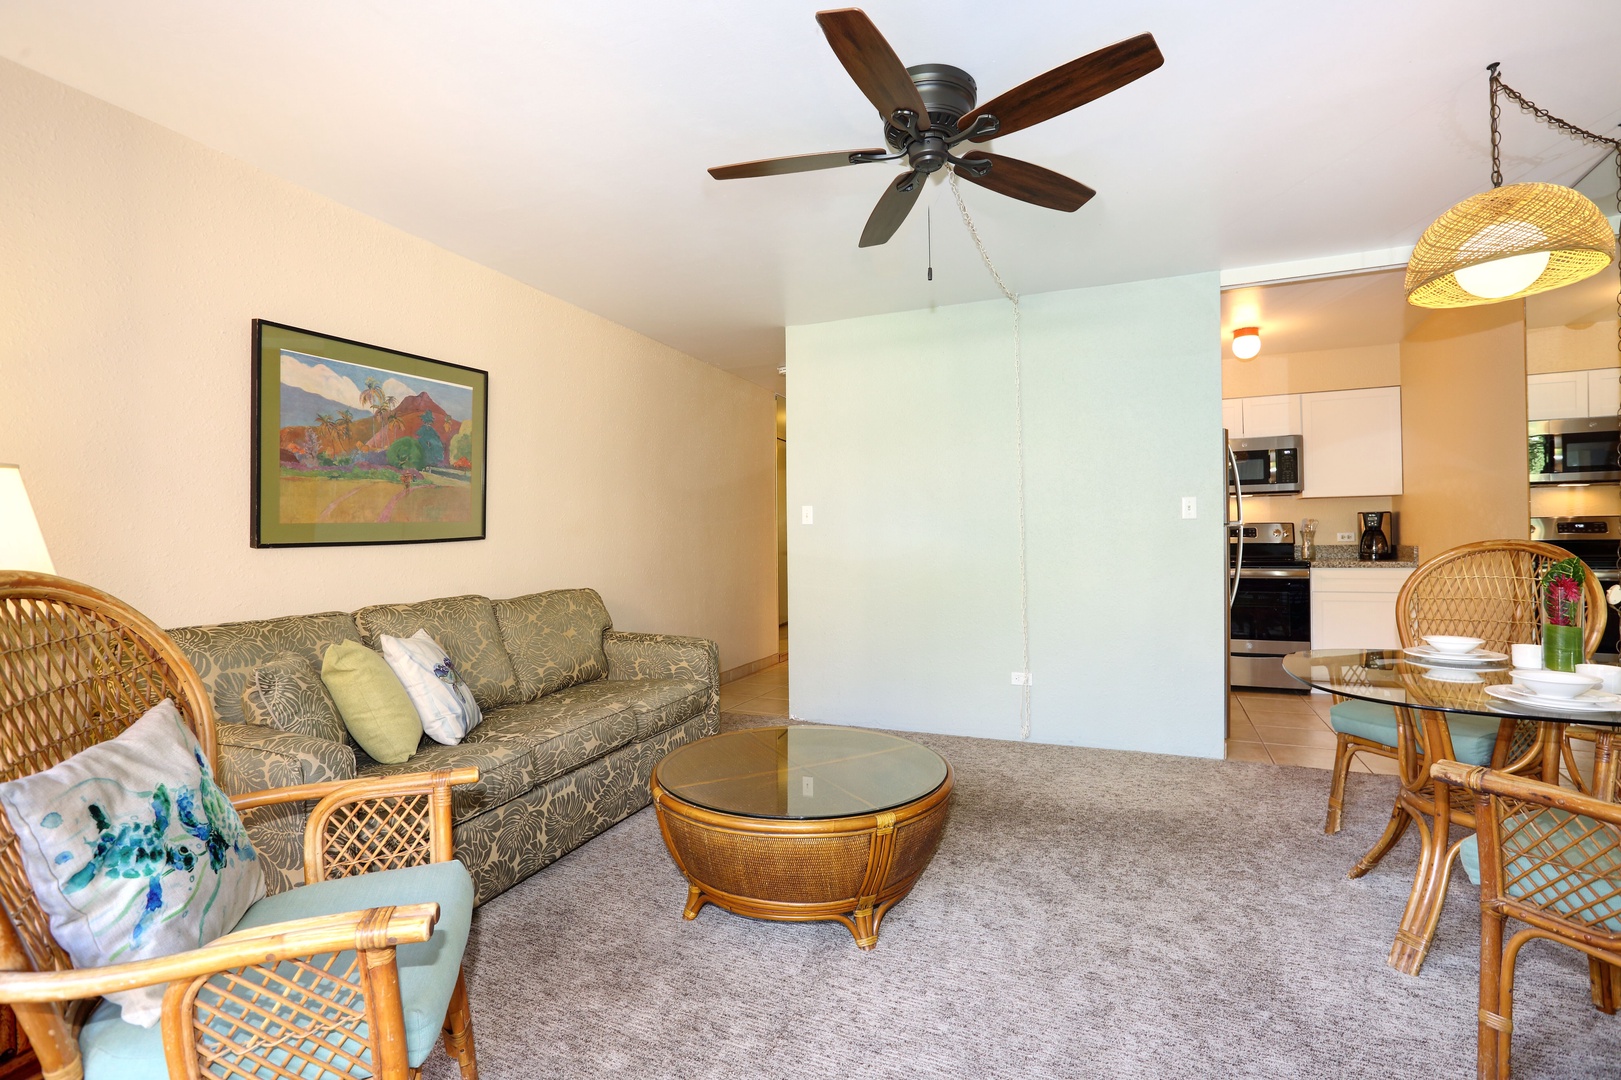 Lahaina Vacation Rentals, Paki Maui 313 - Living room and dining room combo